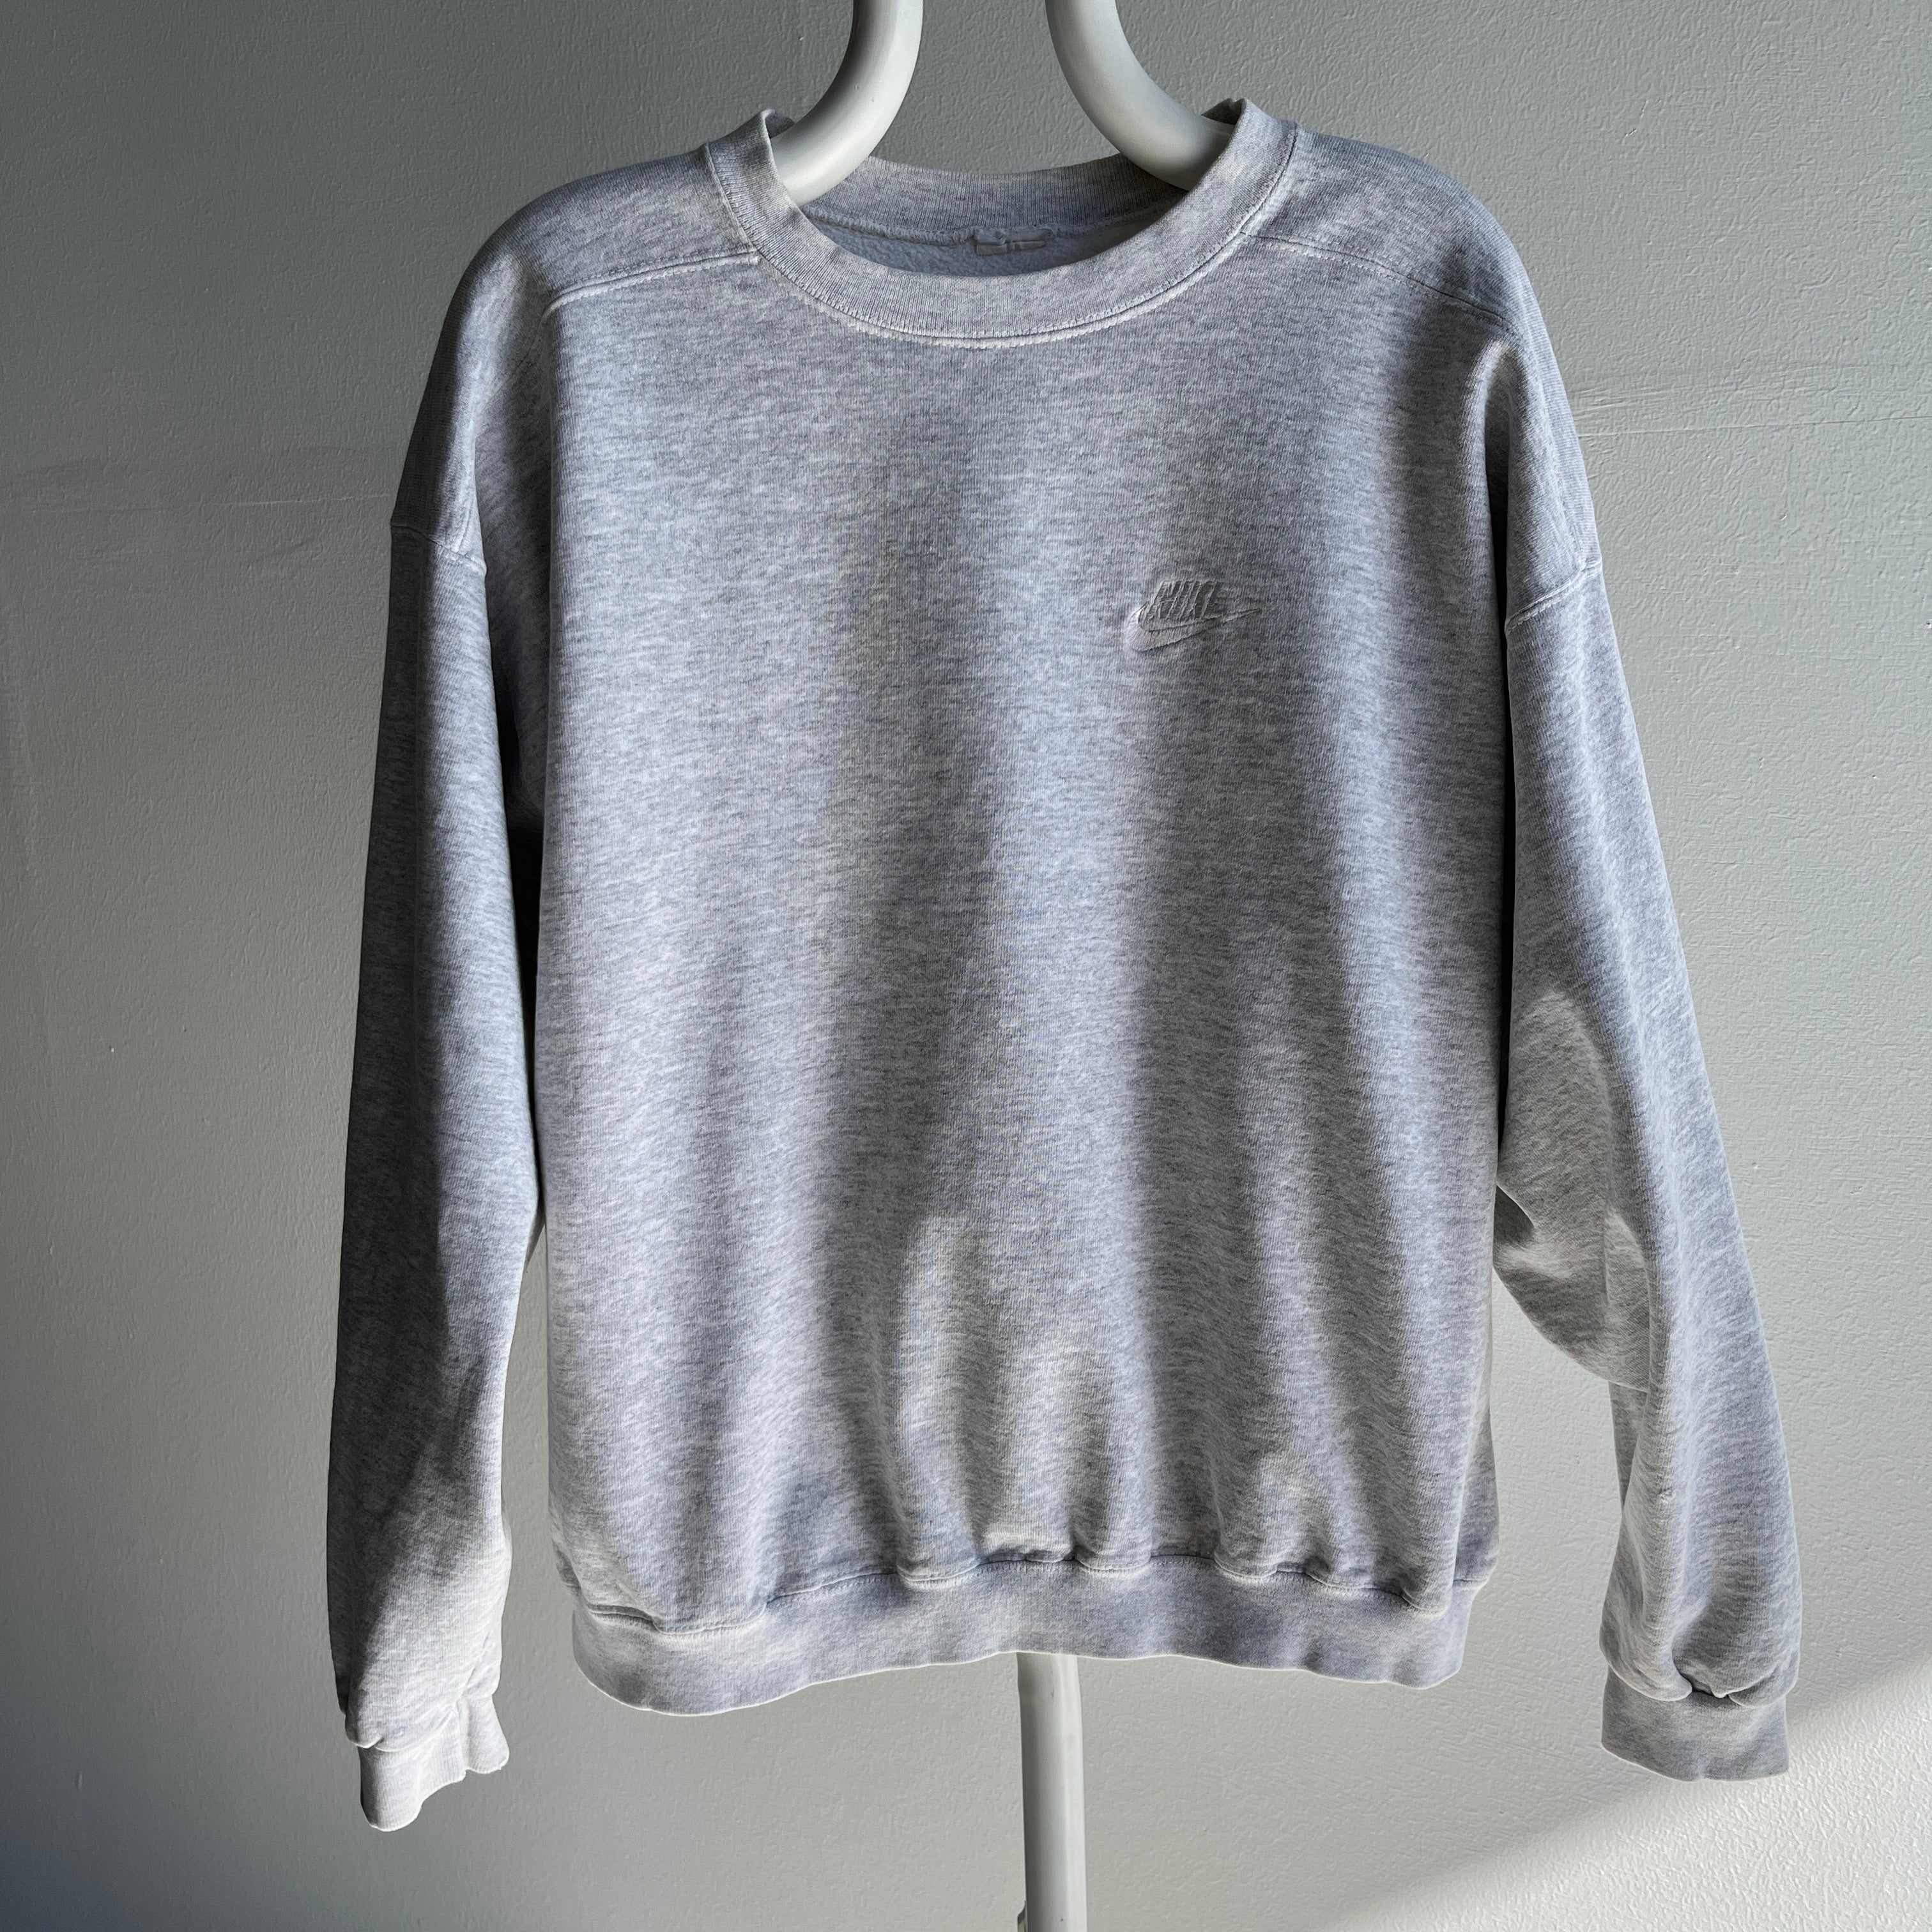 1990s Nike Mostly Cotton Sweatshirt